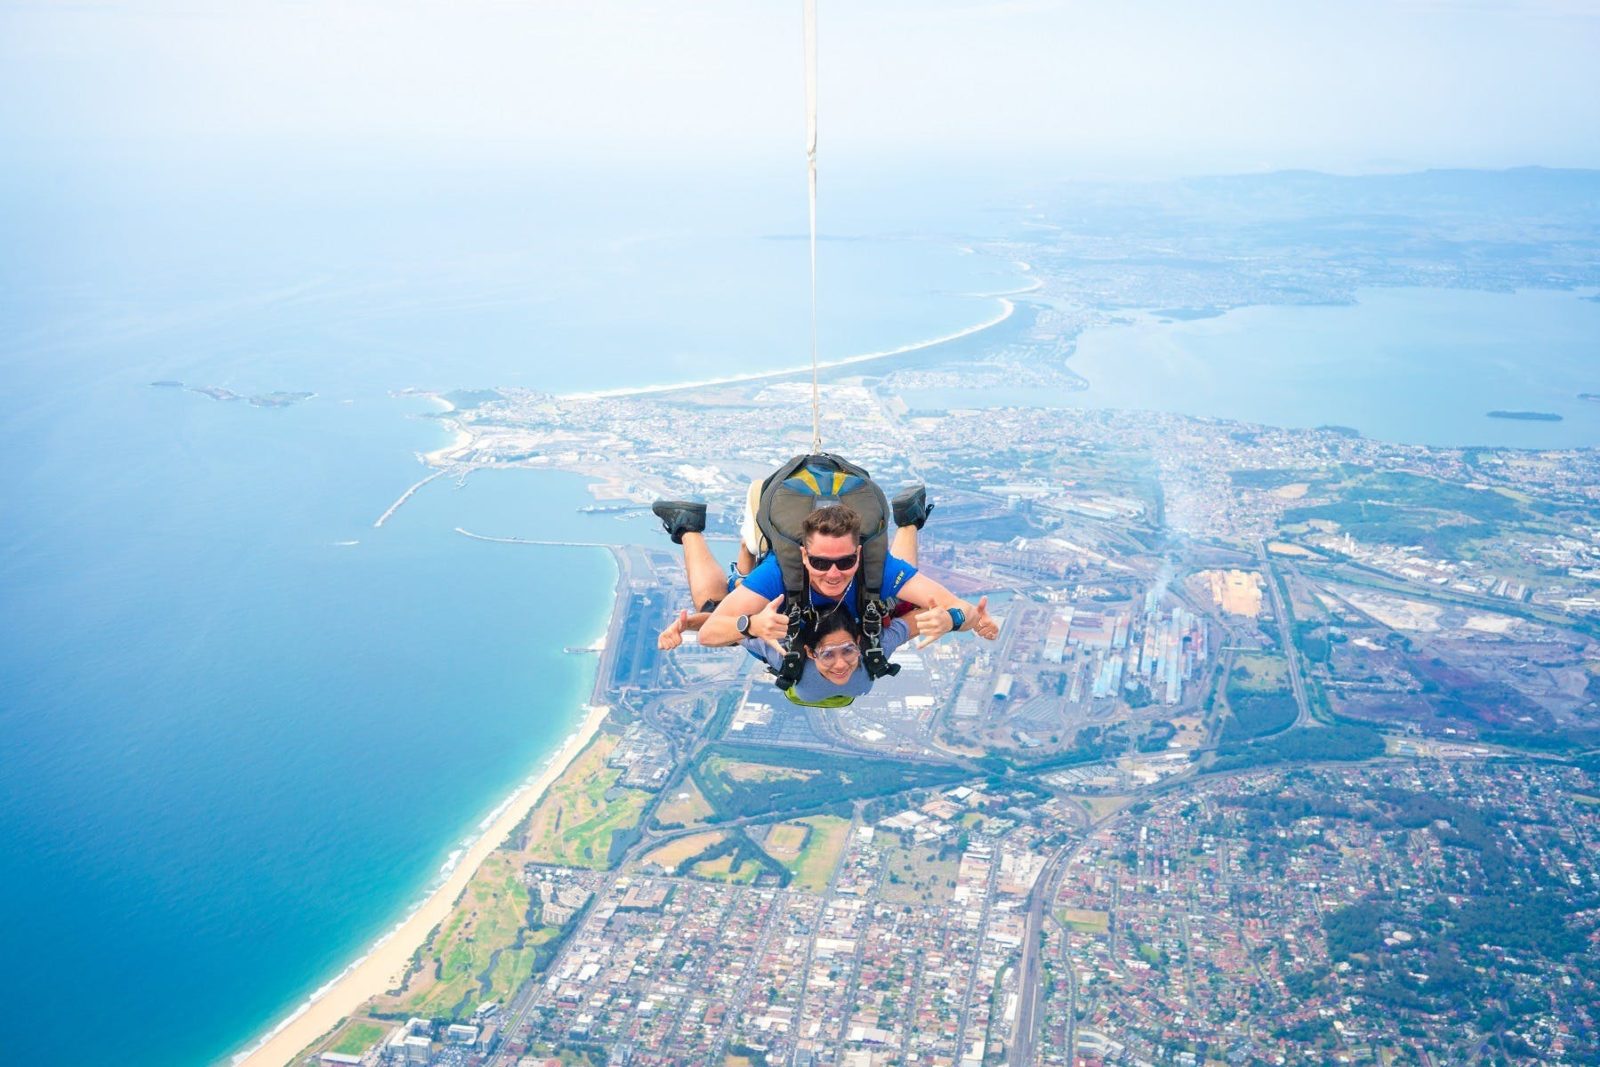 Skydive over Wollongong